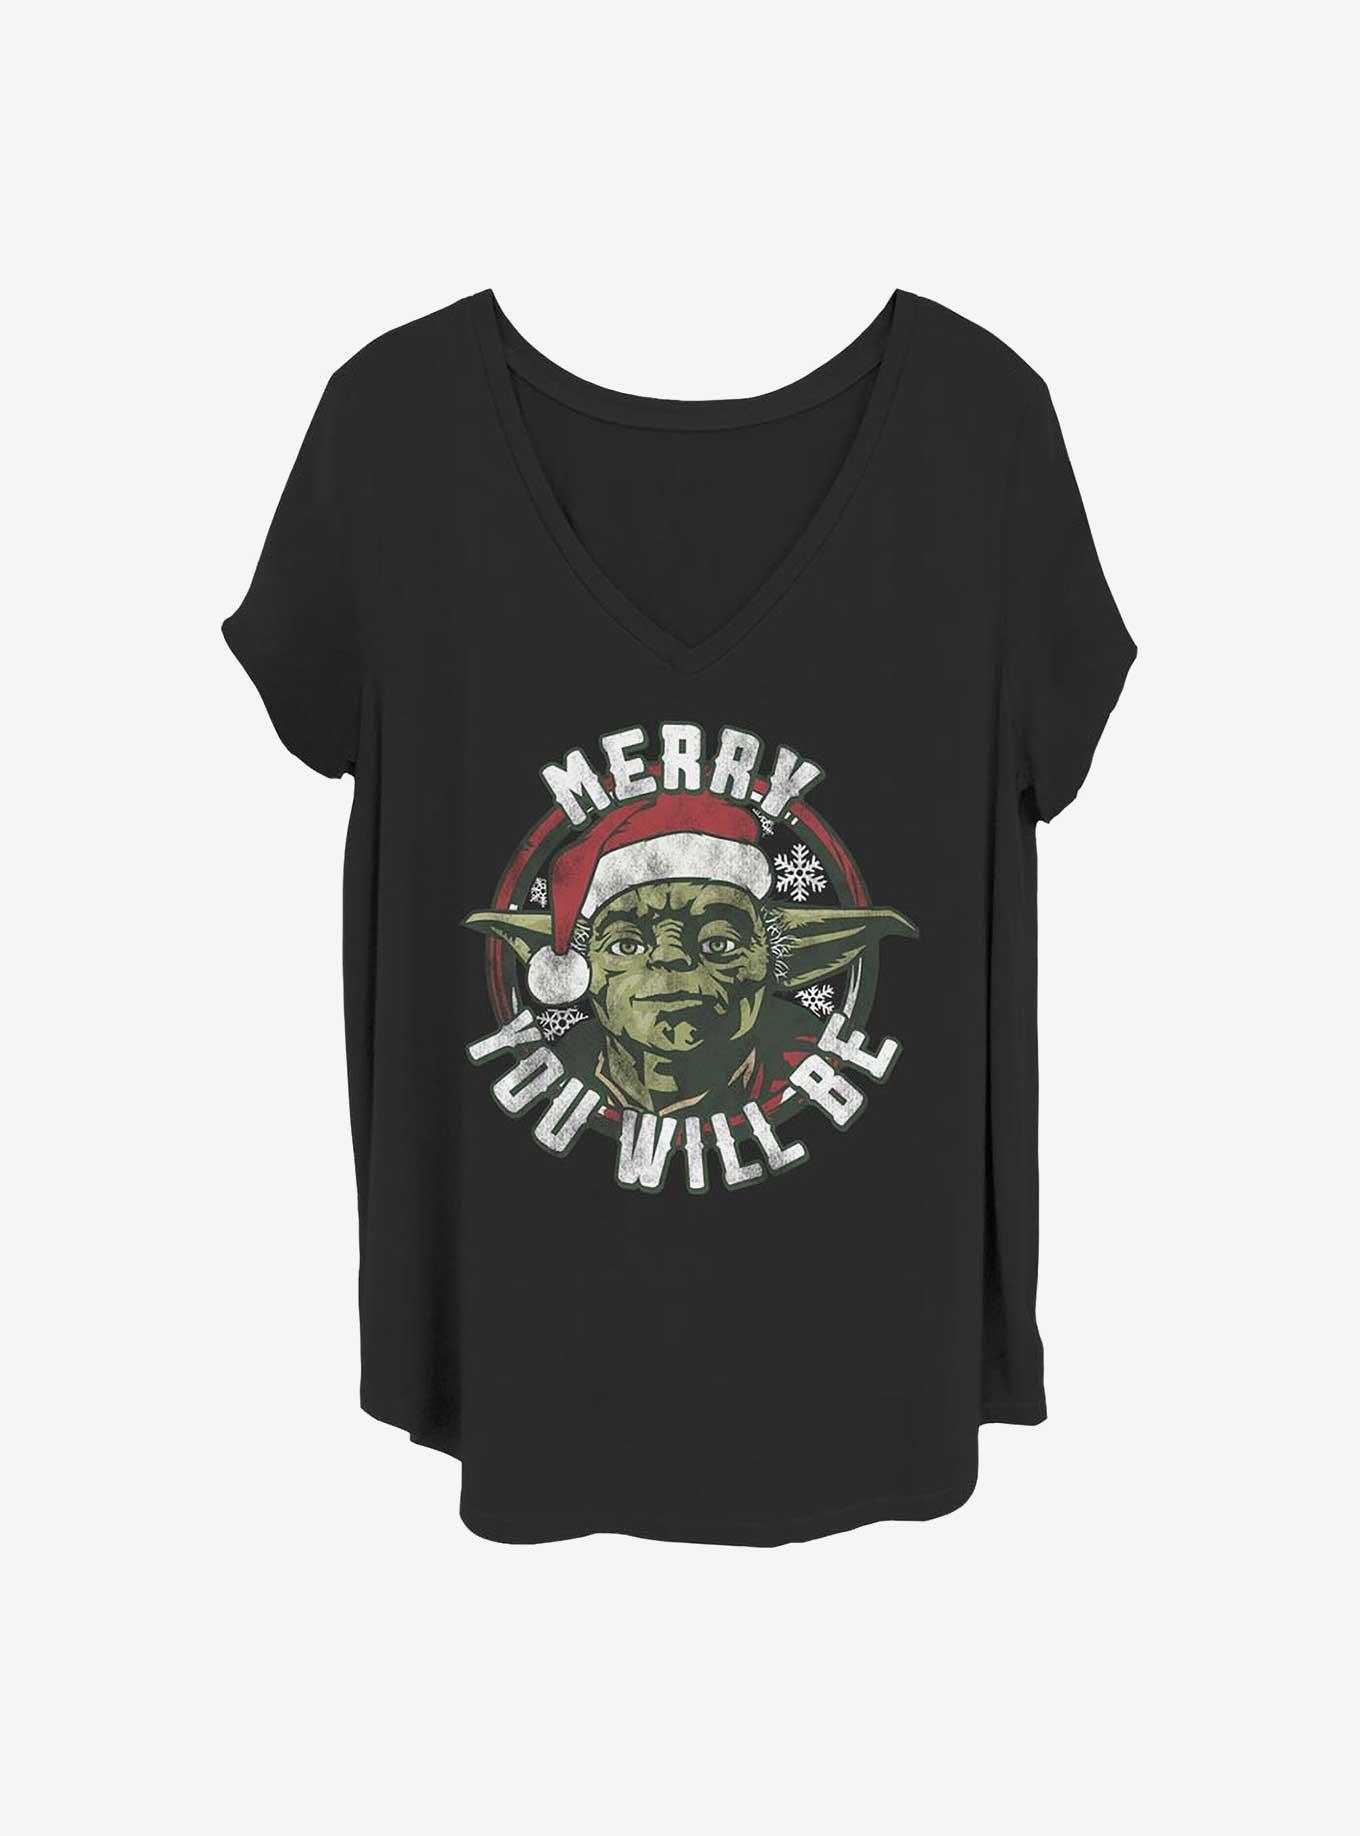 Star Wars Believe You Must Girls T-Shirt Plus